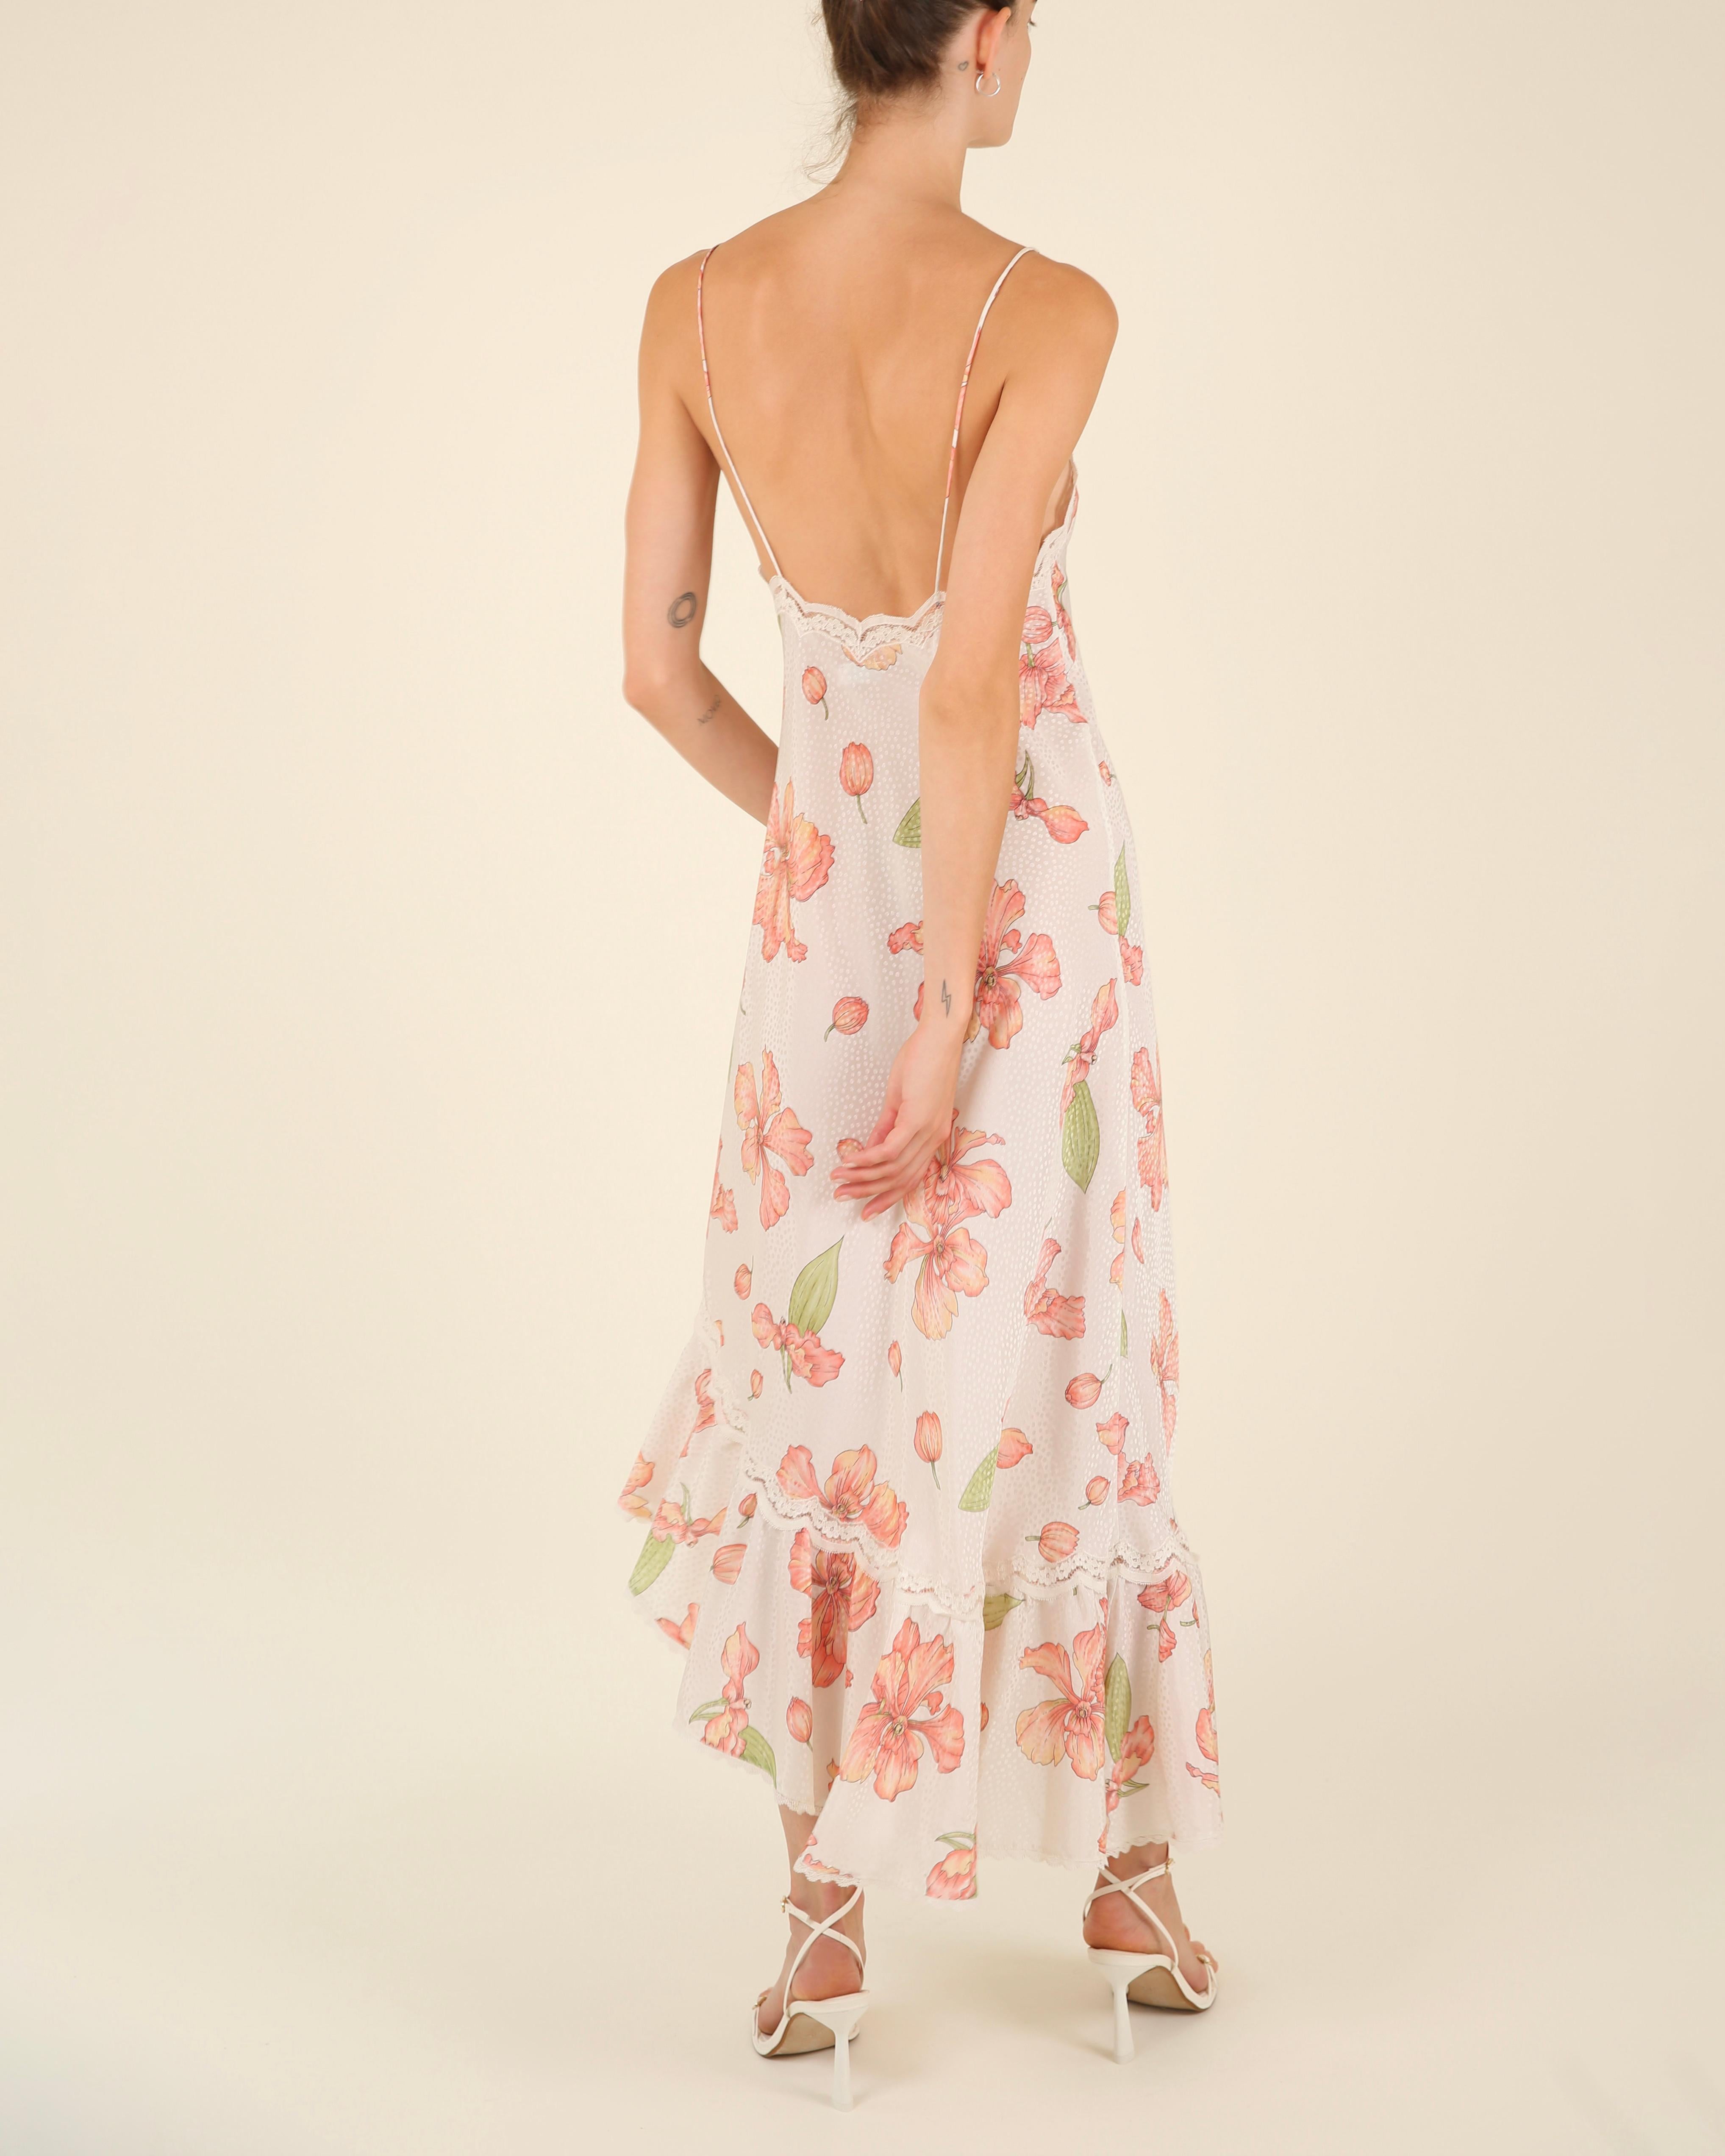 Valentino vtg silk polka dot ivory peach floral print lace night gown slip dress 11